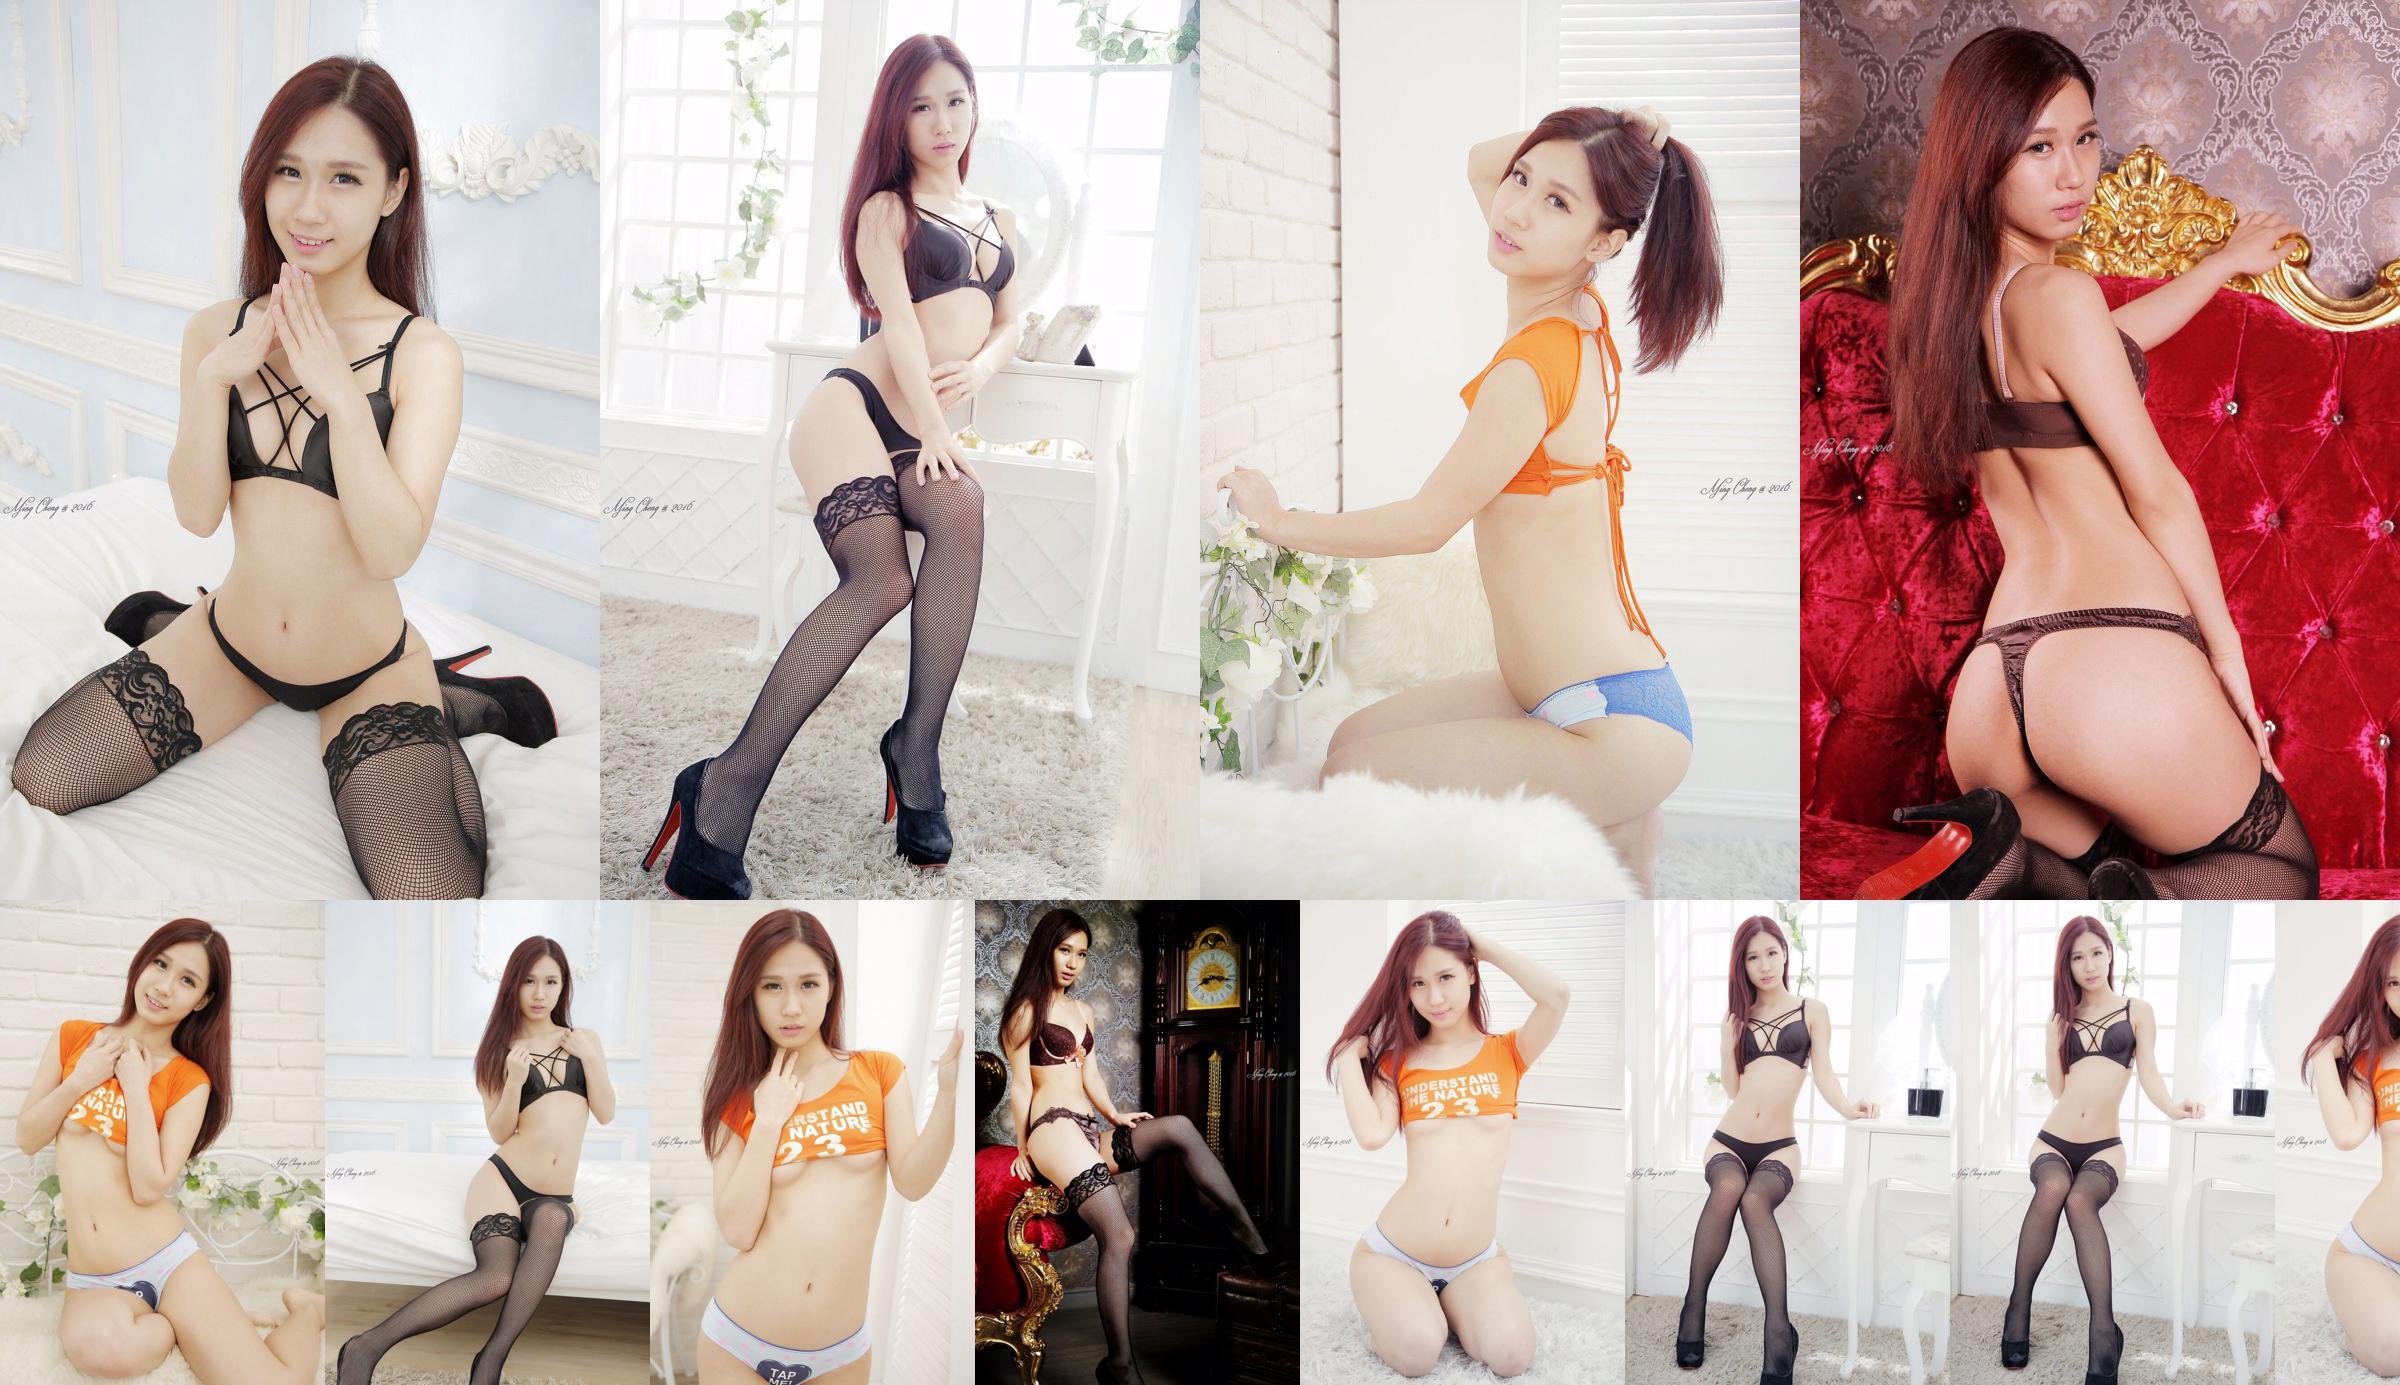 [Taiwan Zhengmei] Belle underwear studio shooting No.ce17b7 Page 1